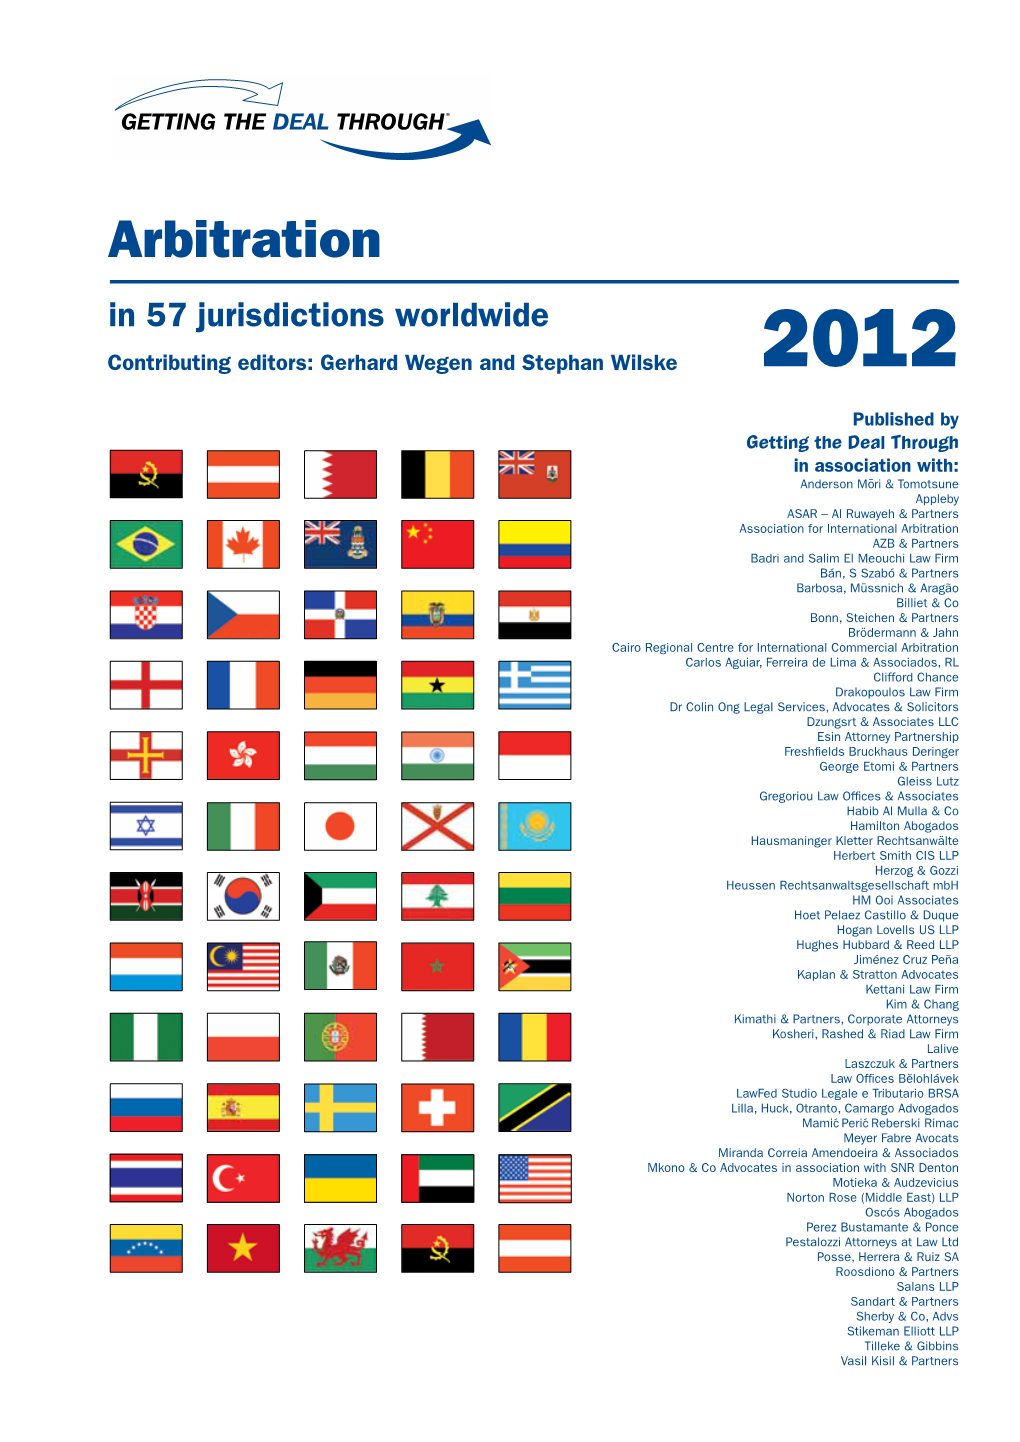 Arbitration in 57 Jurisdictions Worldwide Contributing Editors: Gerhard Wegen and Stephan Wilske 2012